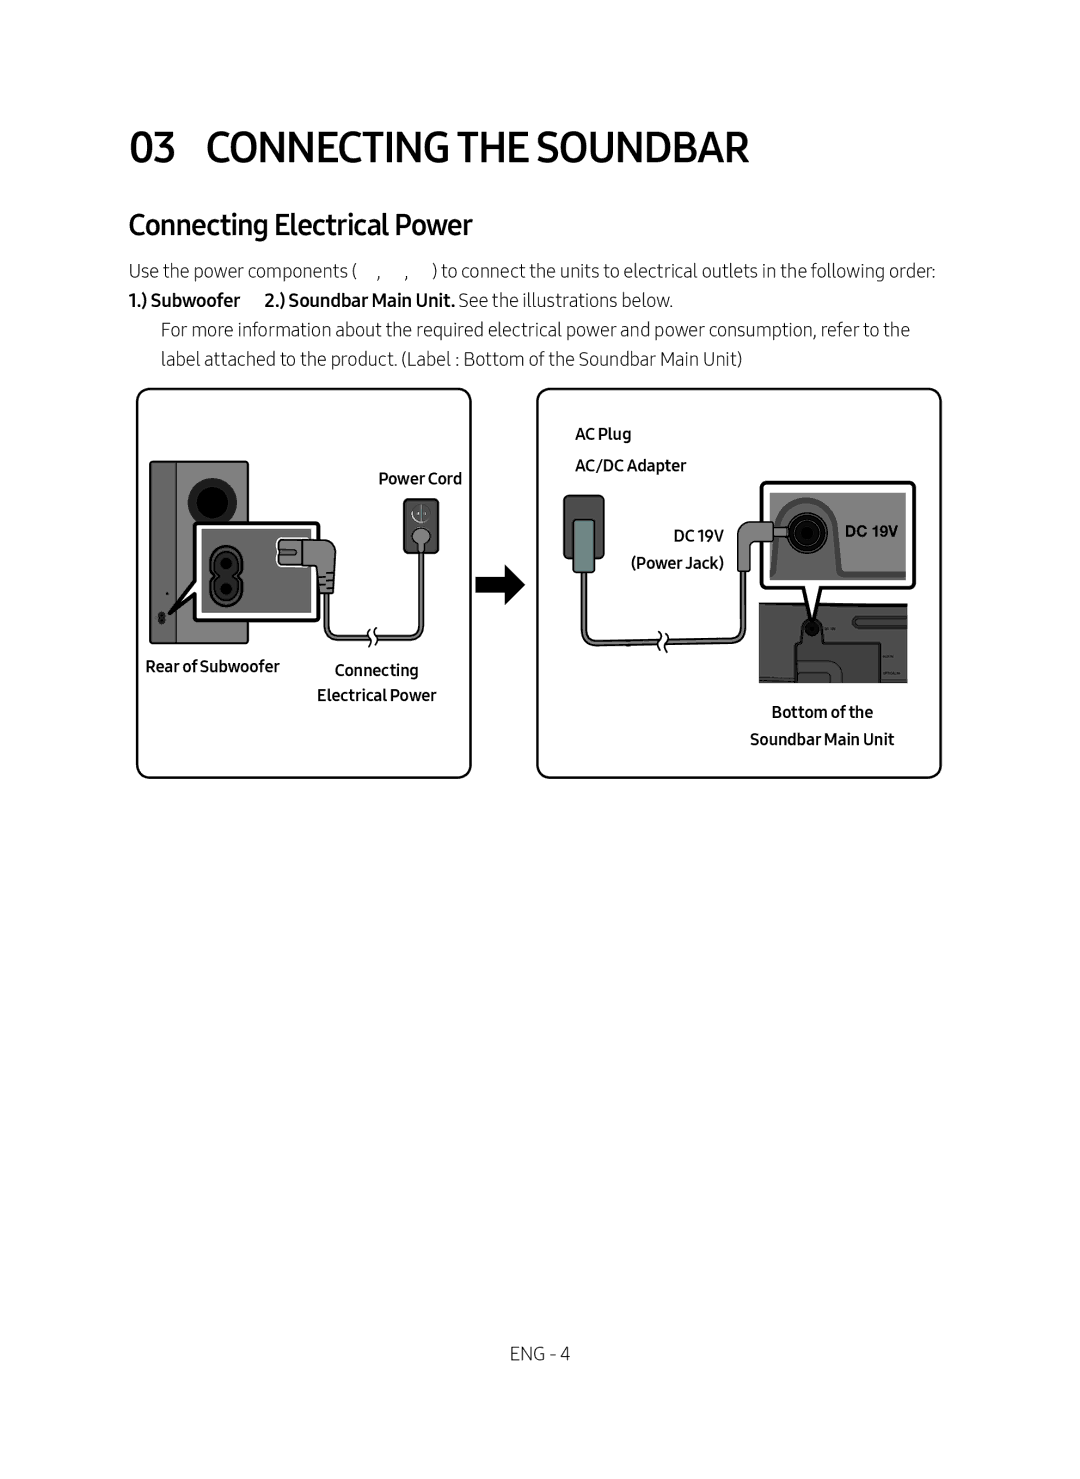 Samsung HW-M4500/EN manual Connecting the Soundbar, Connecting Electrical Power, AC Plug 1Power Cord AC/DC Adapter 